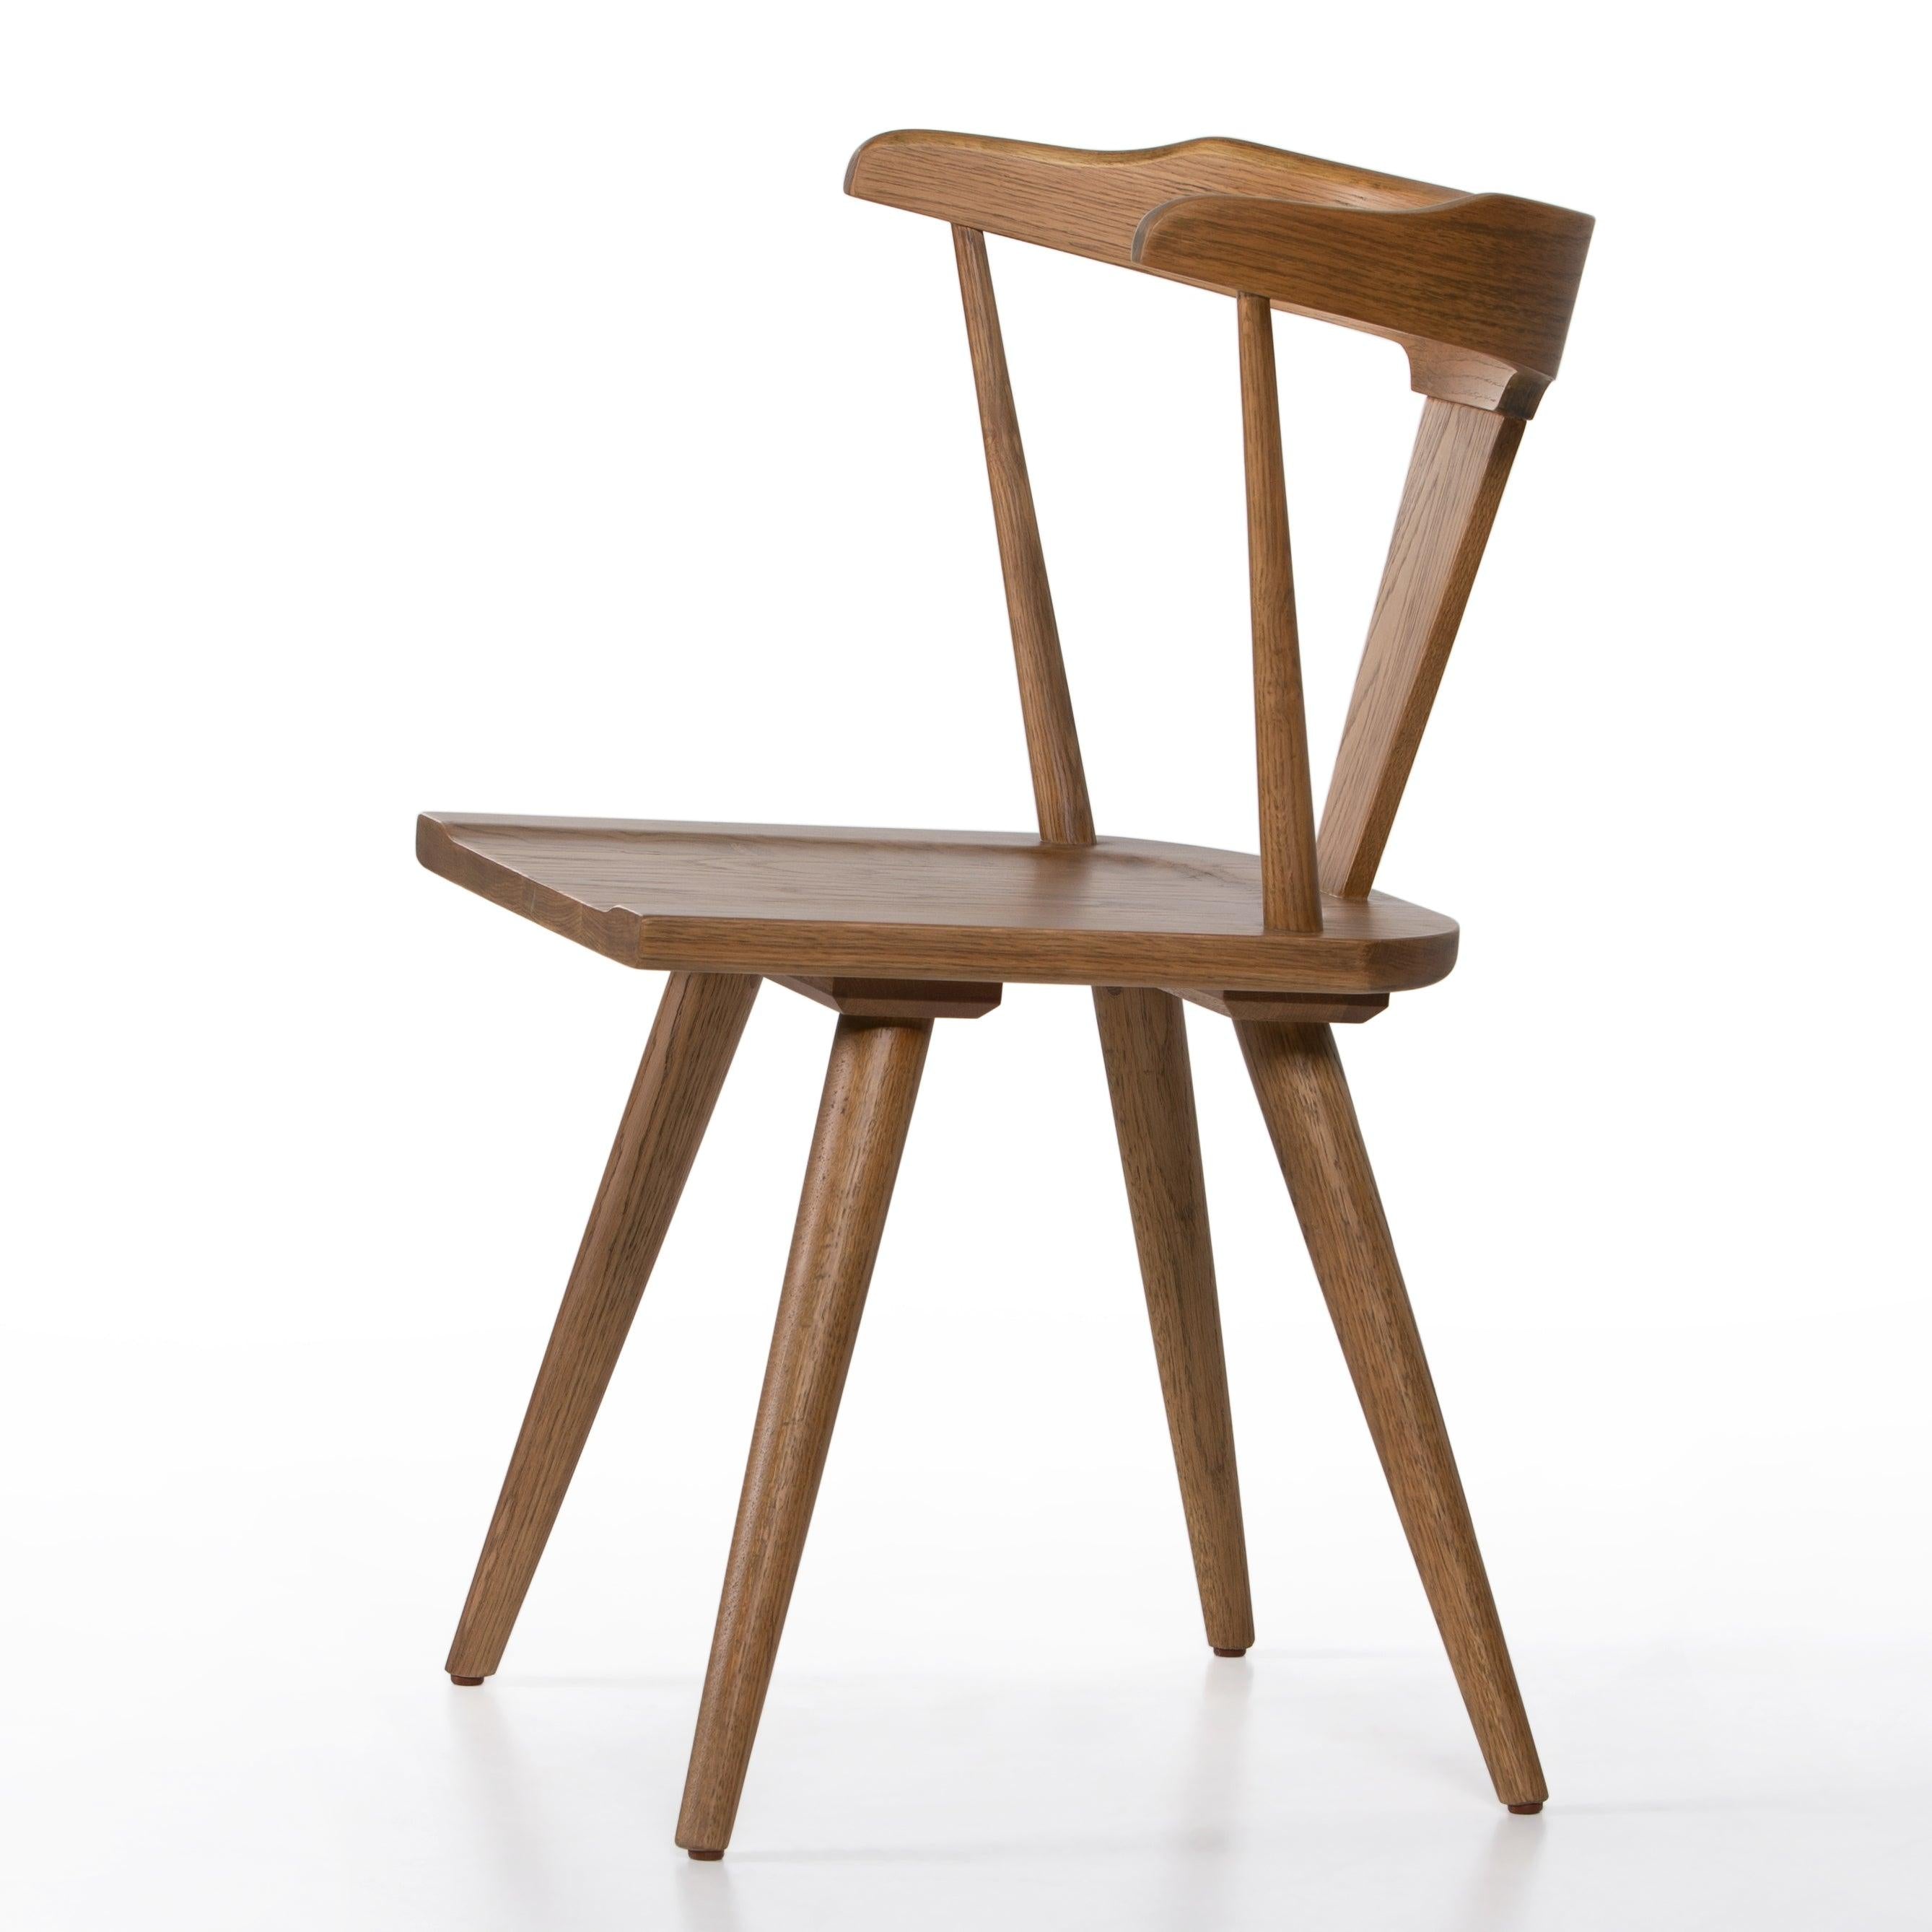 Ripley Dining Chair, Sandy Oak - Reimagine Designs - Dining Chair, new